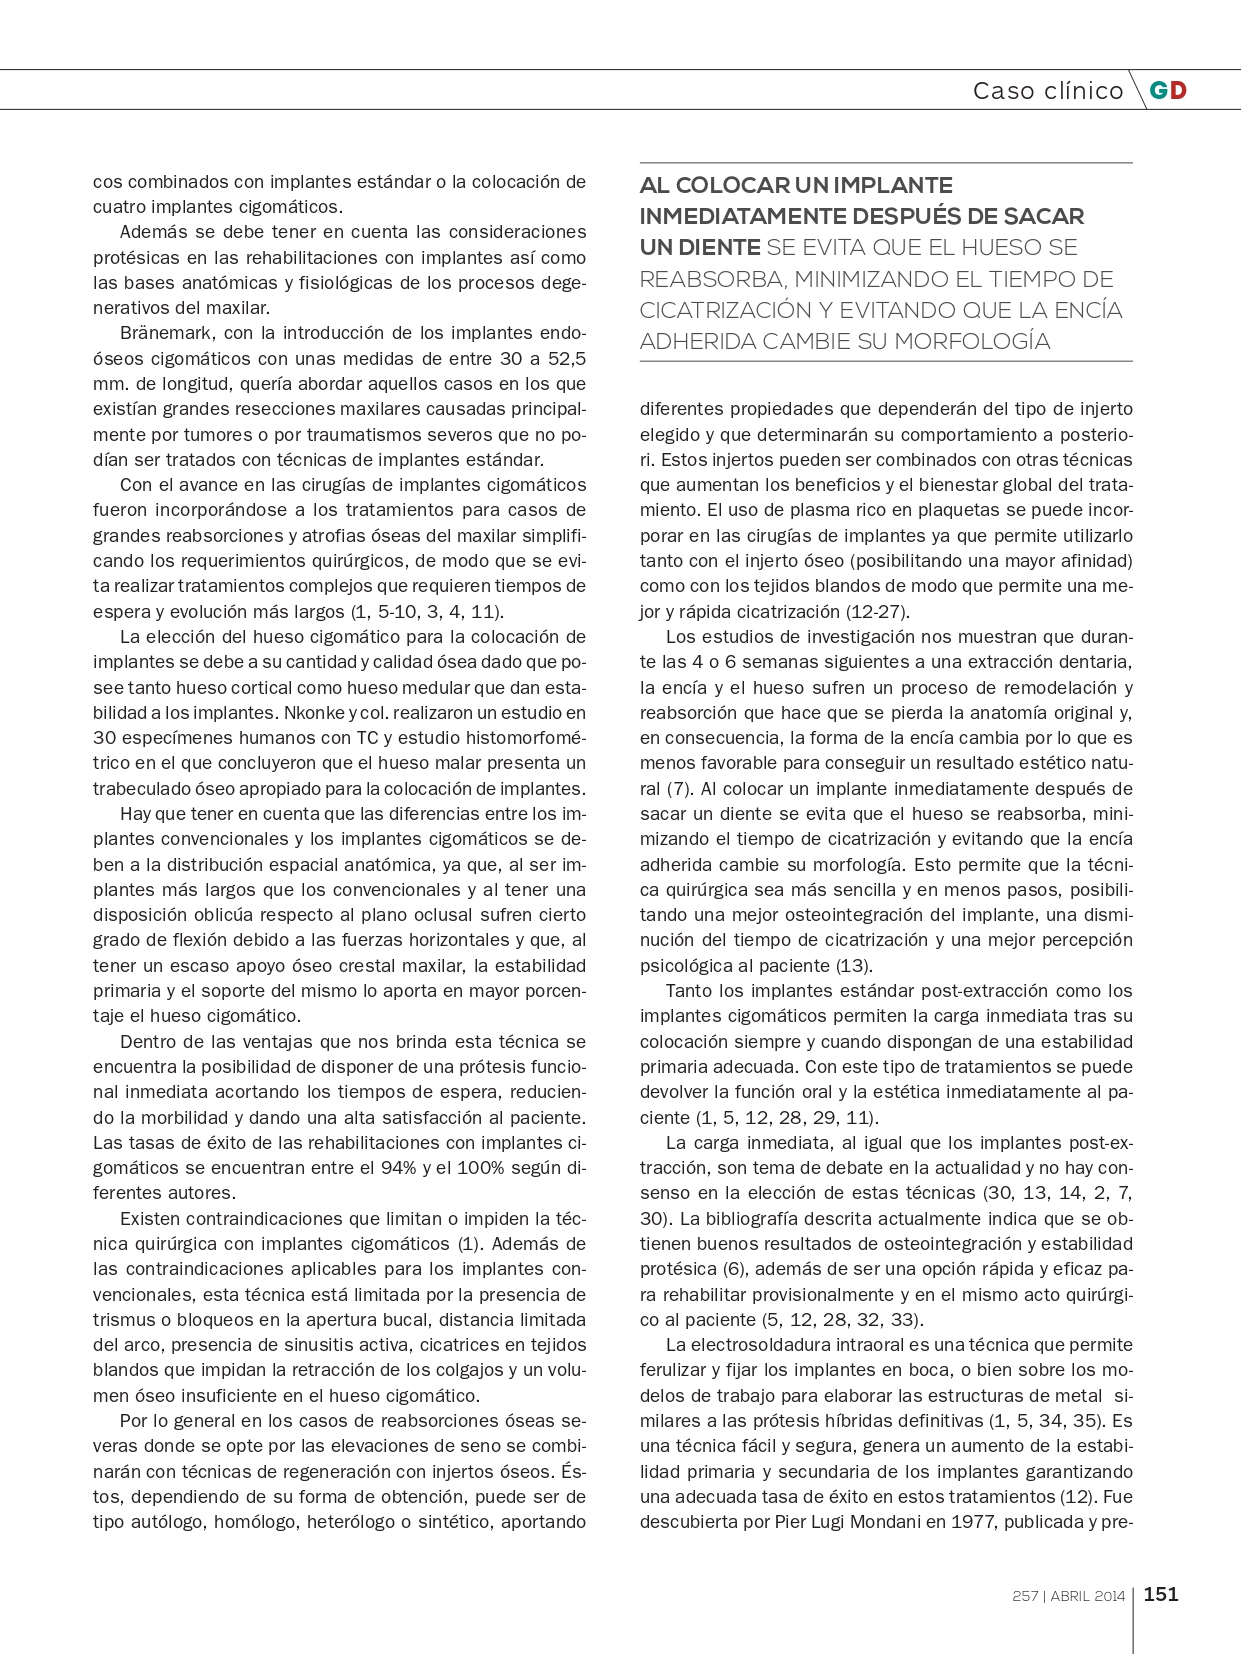 Rehabilitación-del-Maxilar-superior-con-implantes-Cigomáticos_page-0002